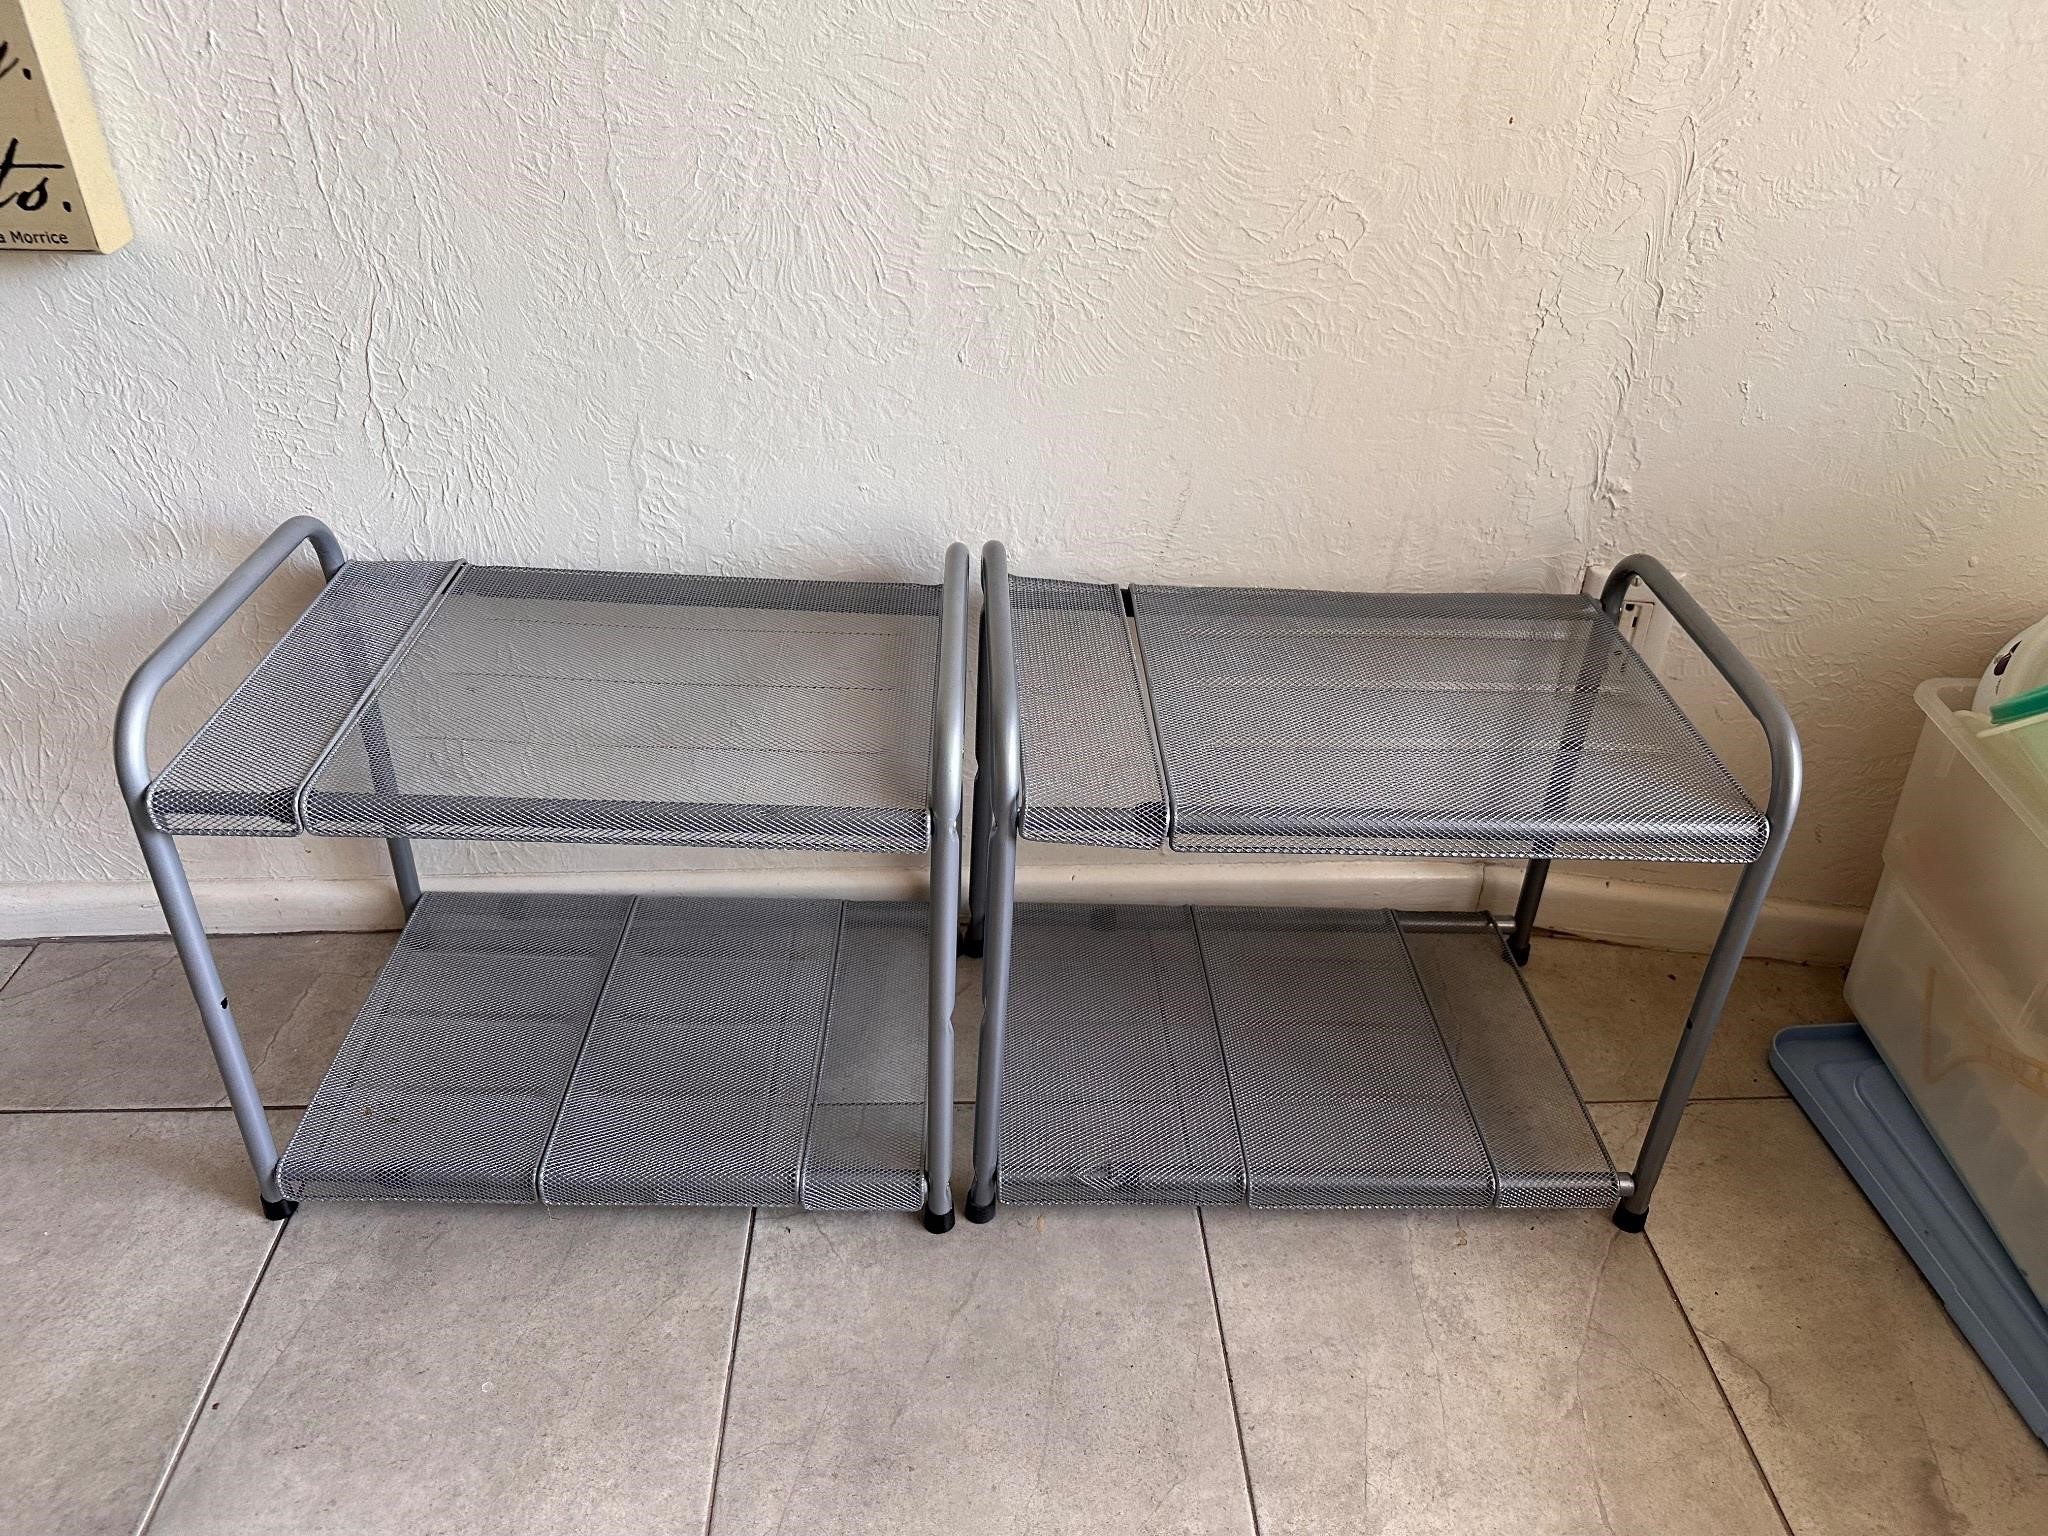 2 Expandable metal shelves